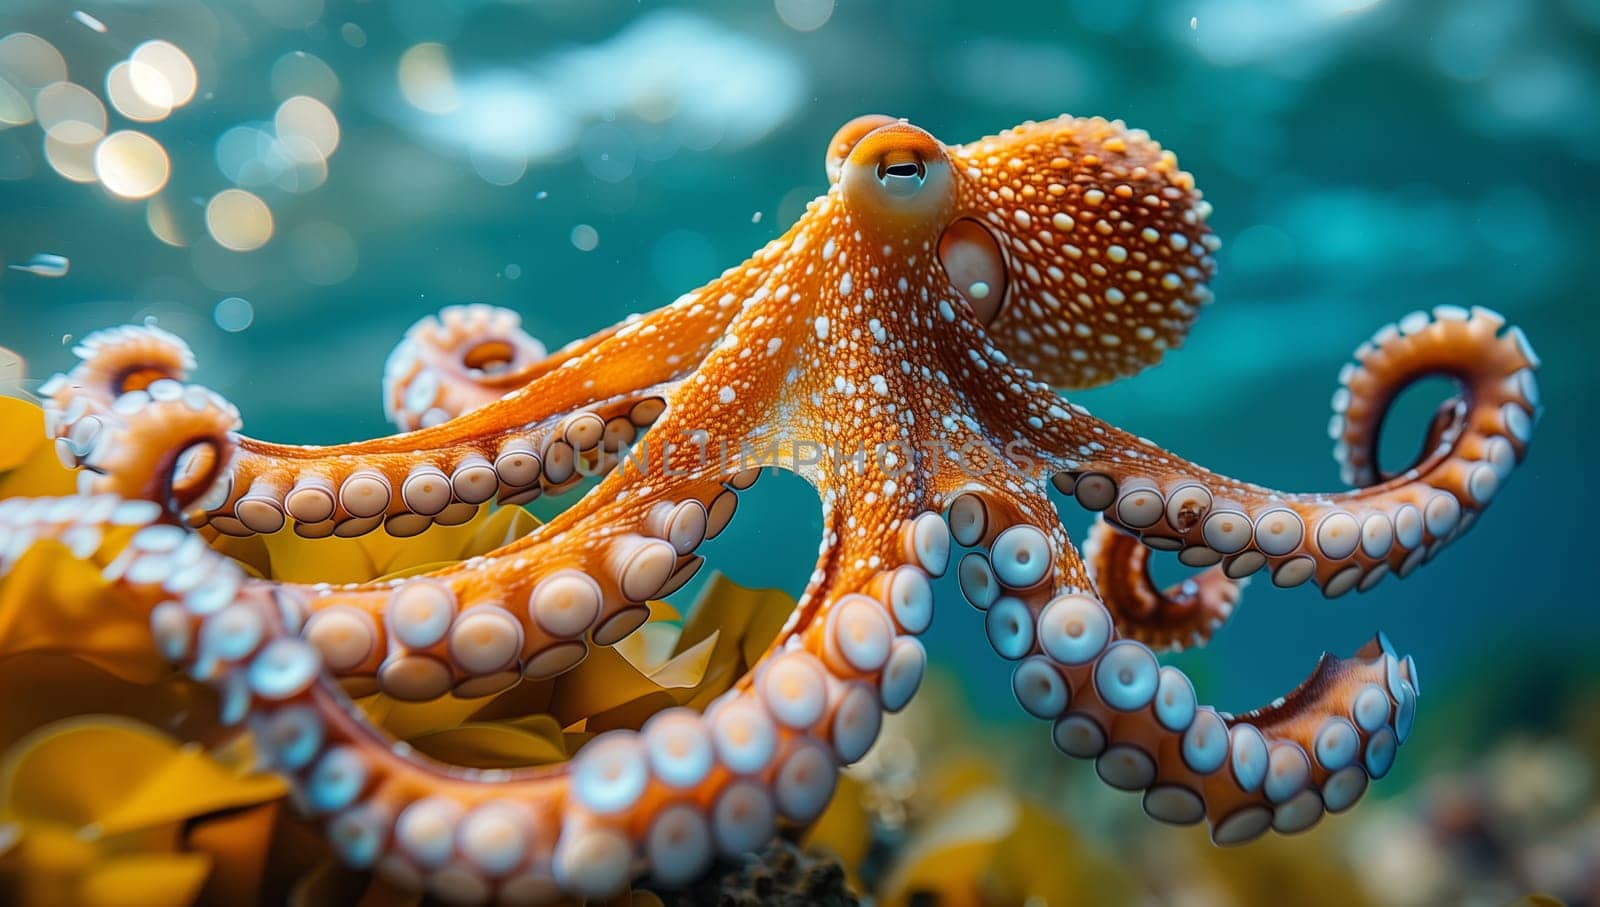 Marine invertebrate, cephalopod swimming near seaweed underwater by richwolf